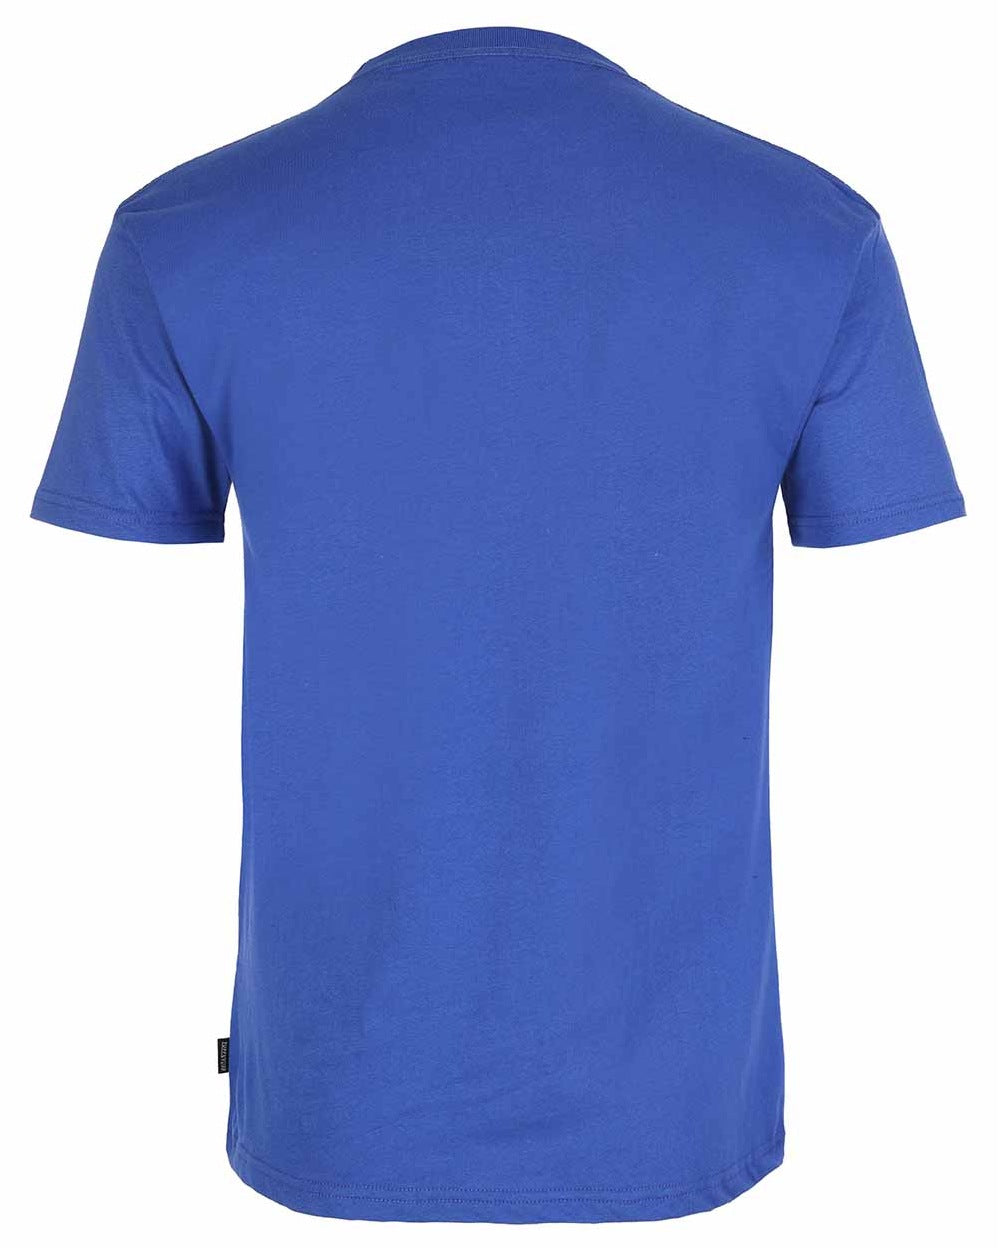 Blue coloured TuffStuff Logo T-Shirt on white background 